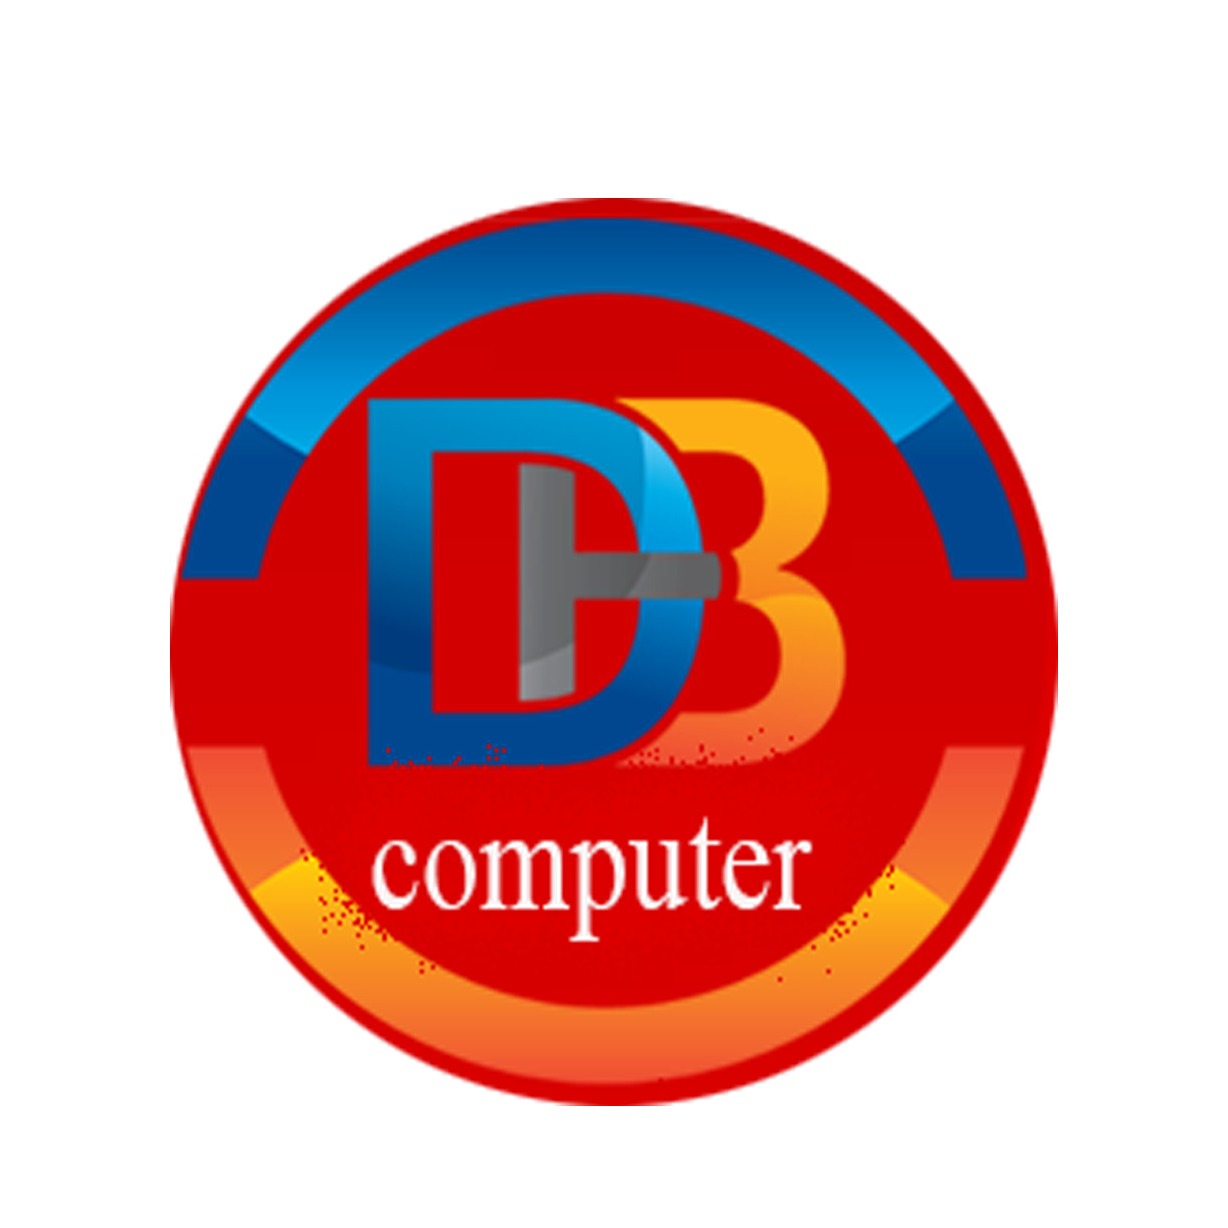 DB. computer